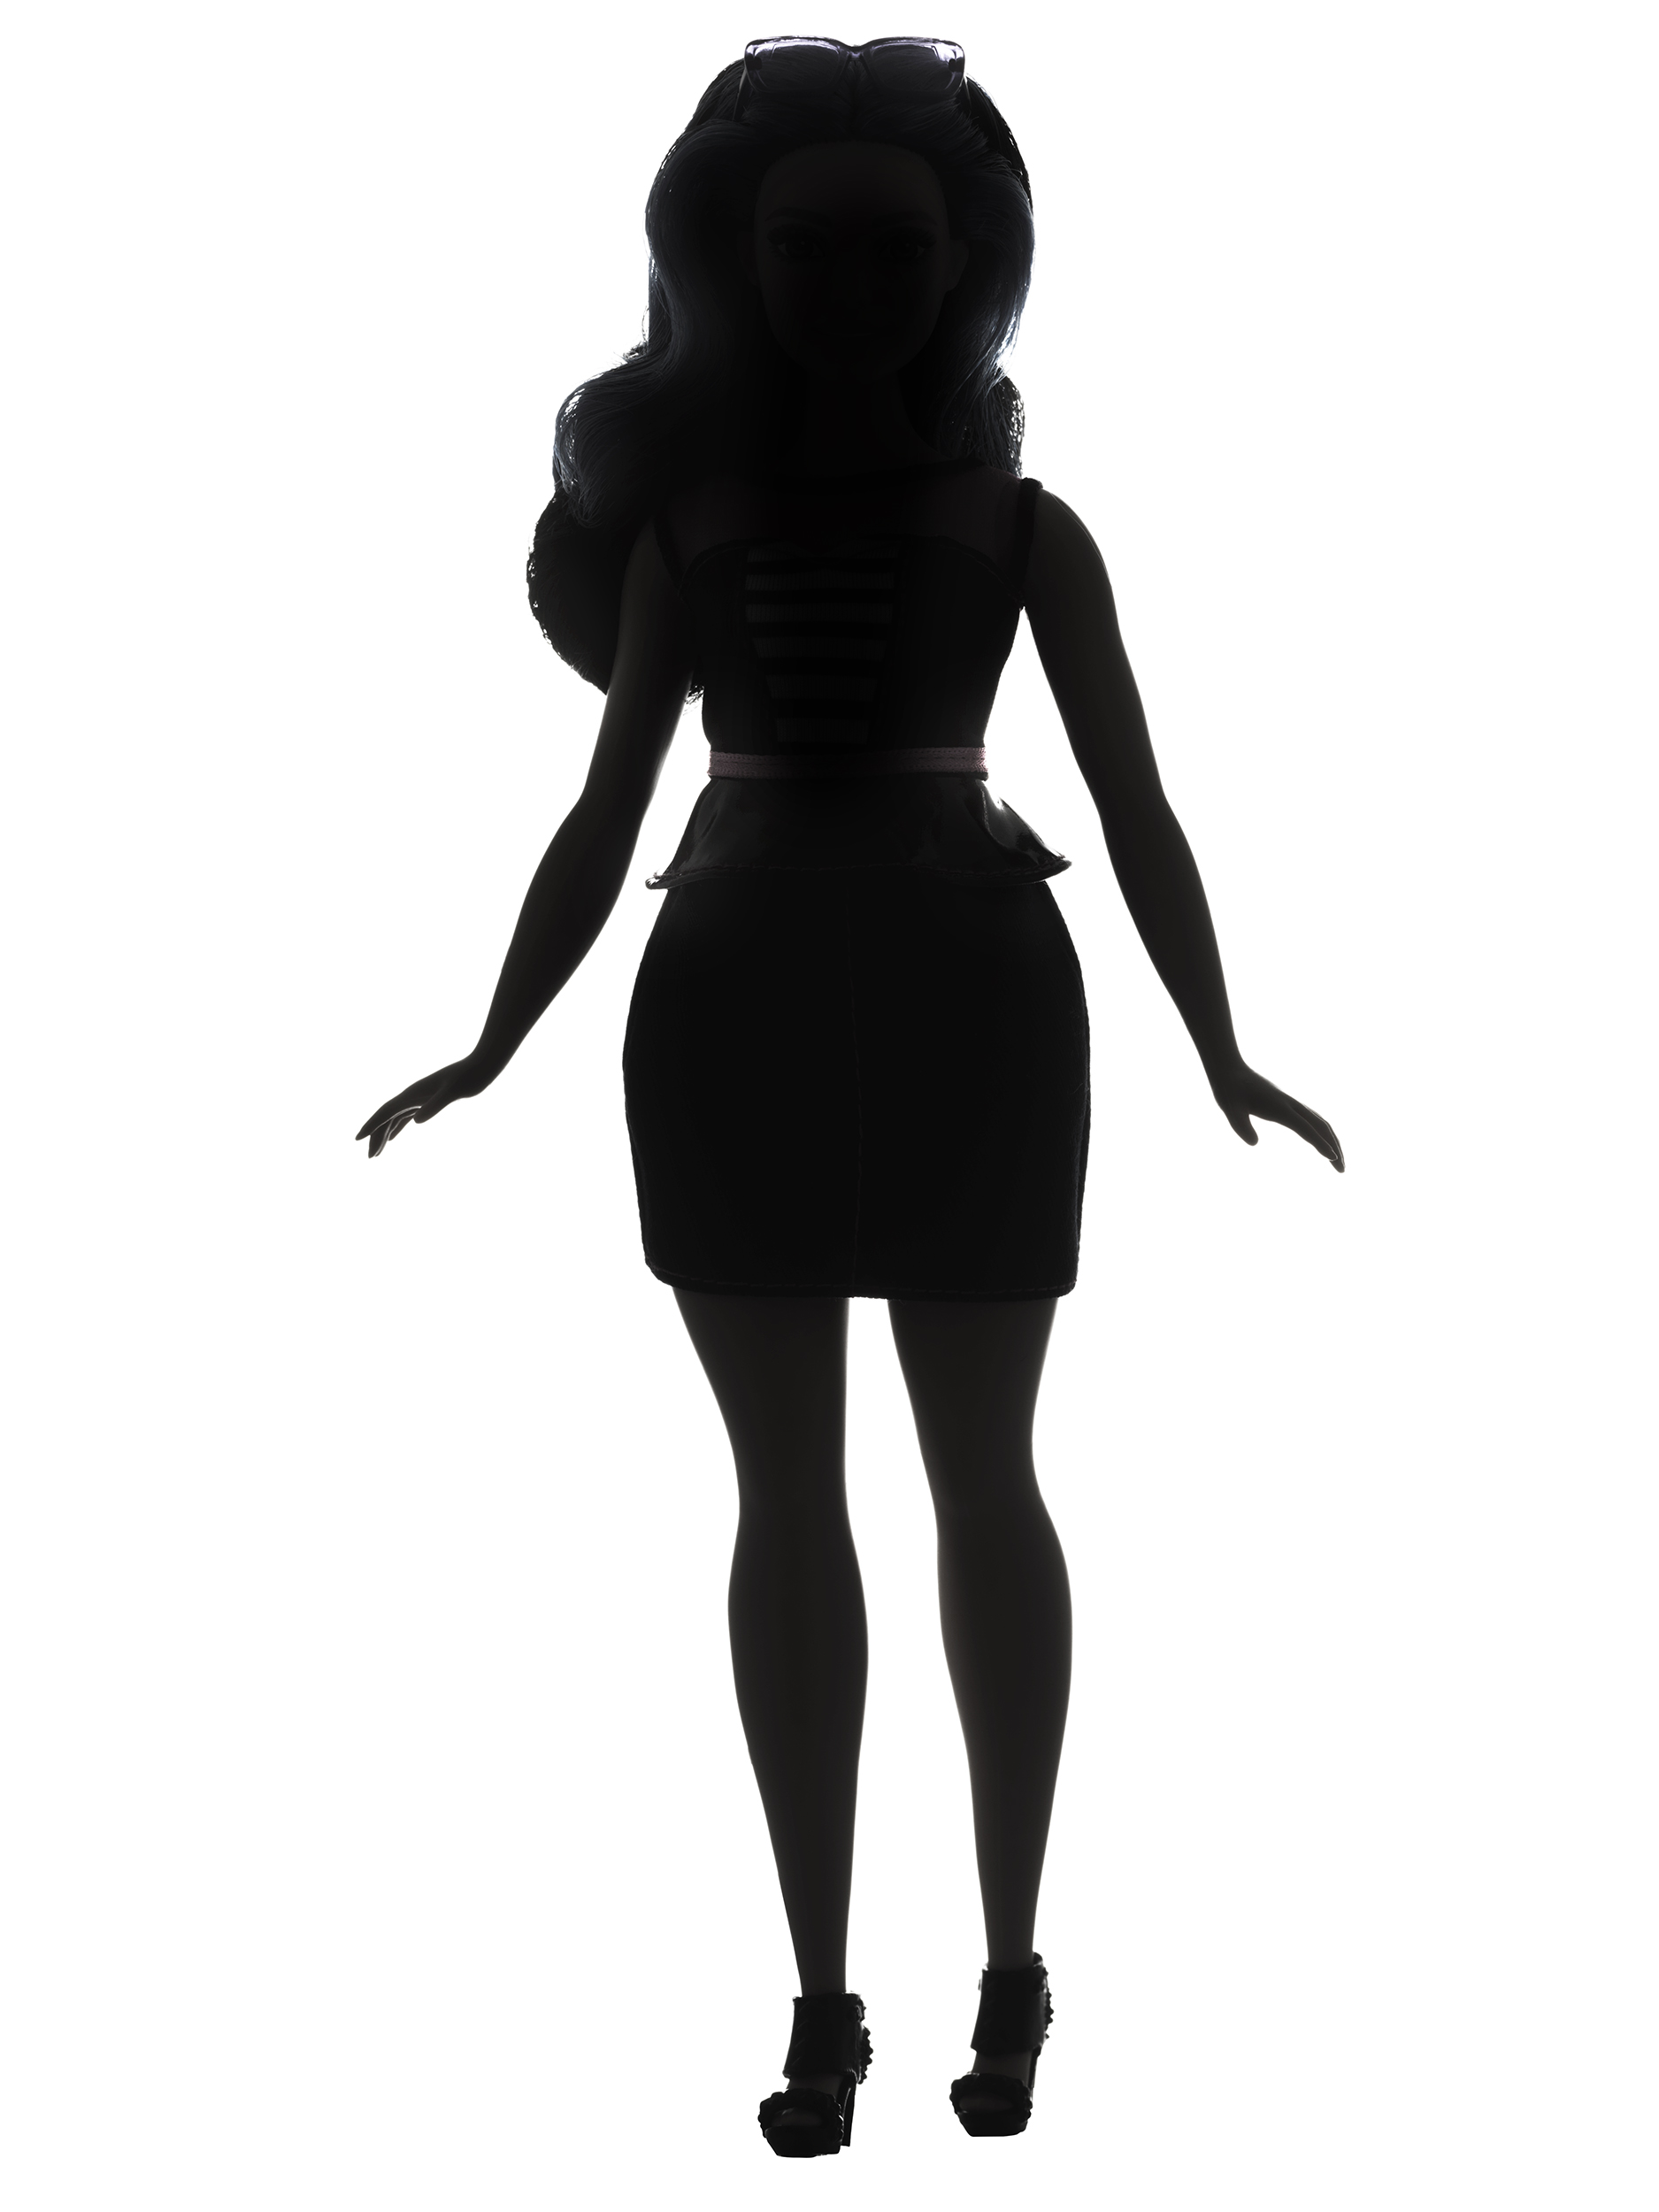 A silhouette of Mattel's new Curvy Barbie